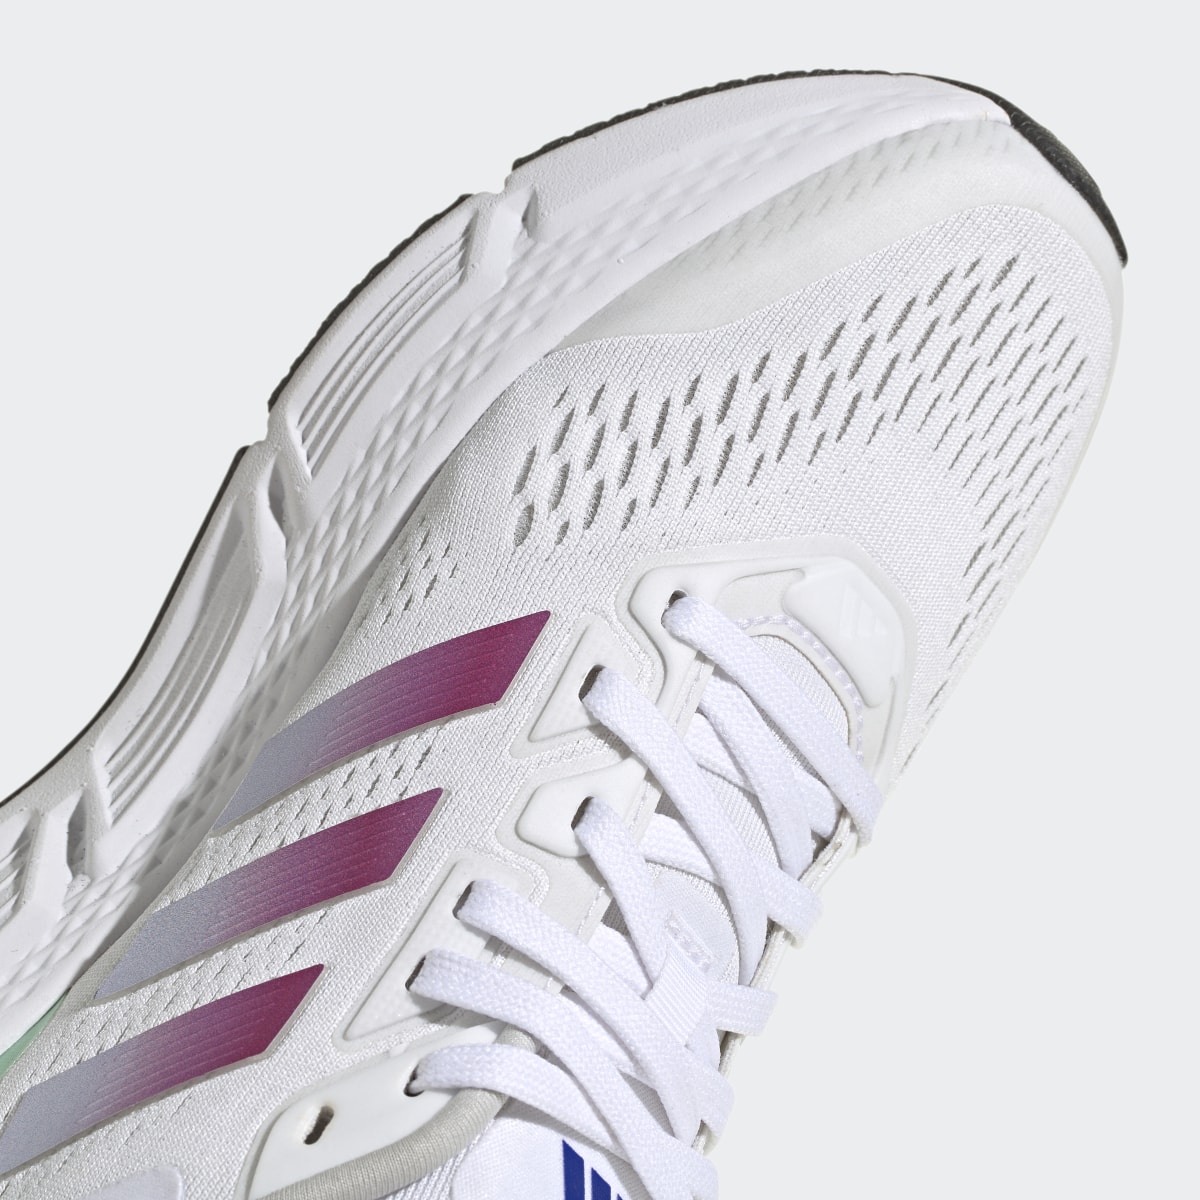 Adidas Questar Schuh. 10